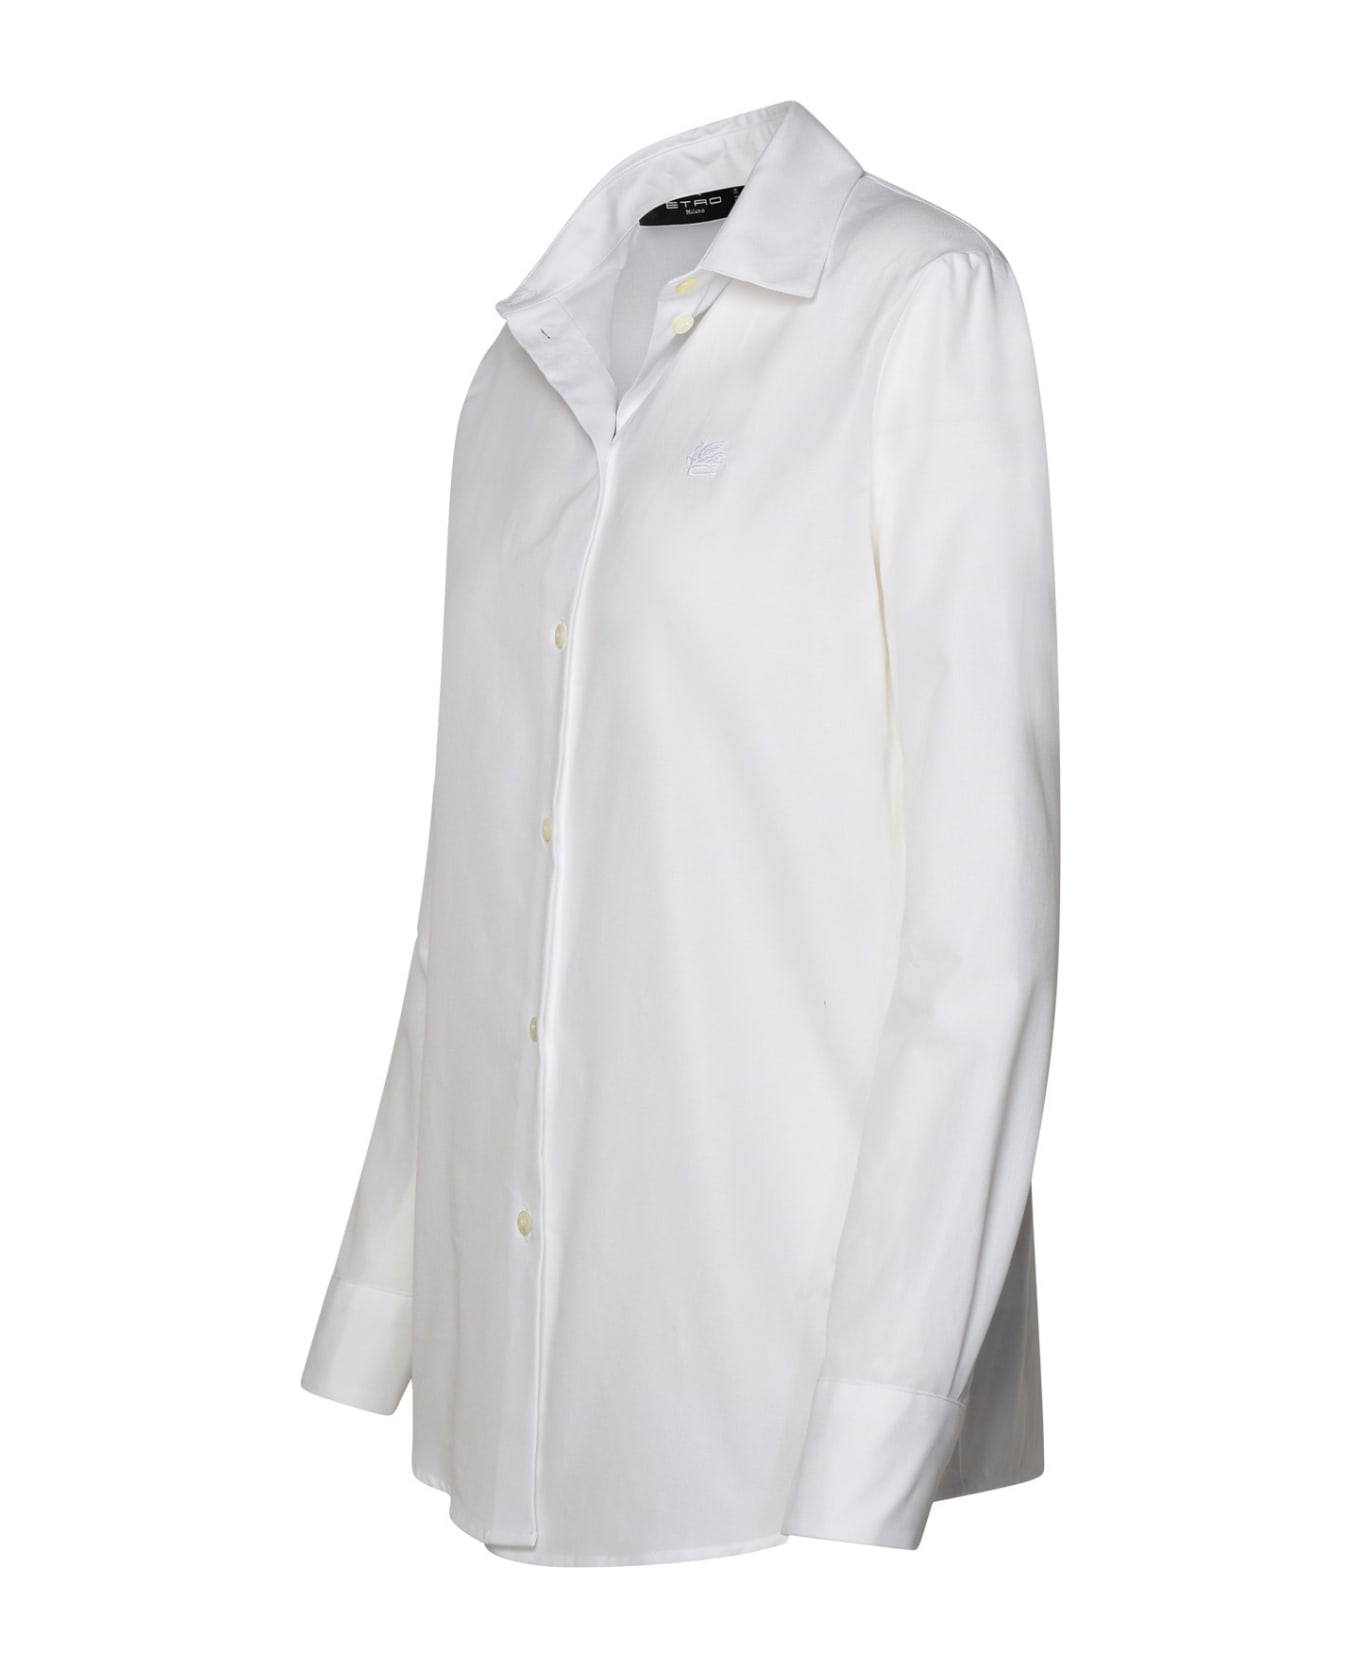 Etro White Cotton Shirt - BIANCO OTTICO (White)